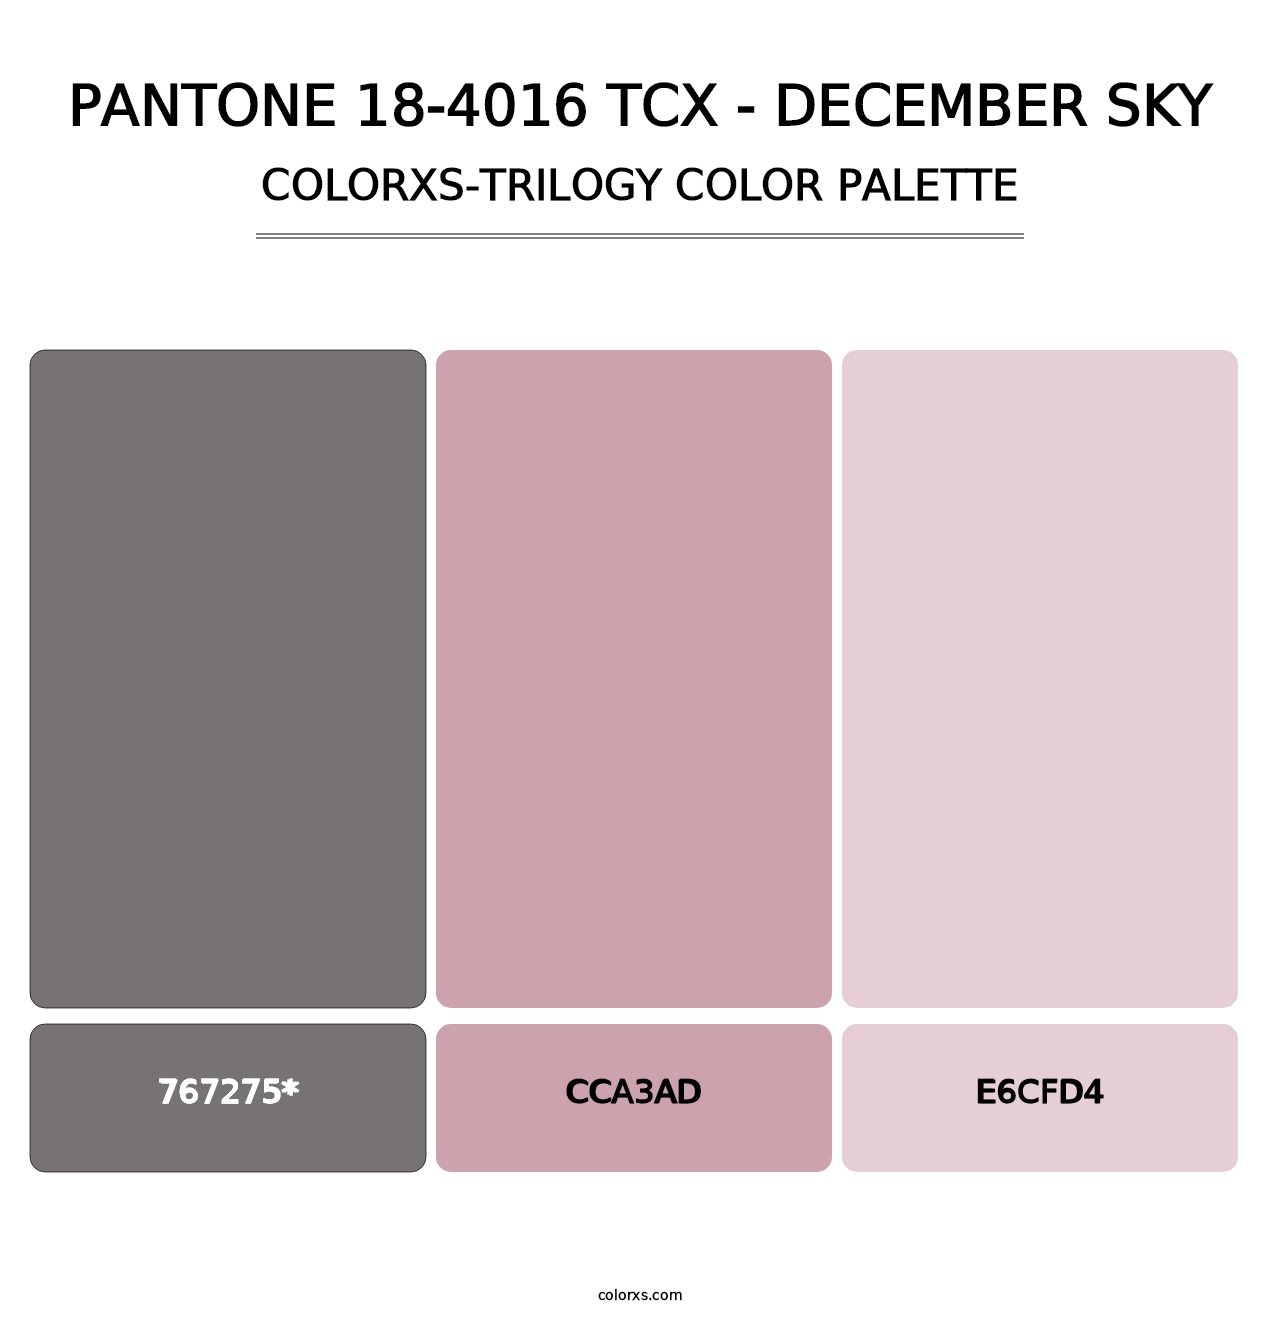 PANTONE 18-4016 TCX - December Sky - Colorxs Trilogy Palette